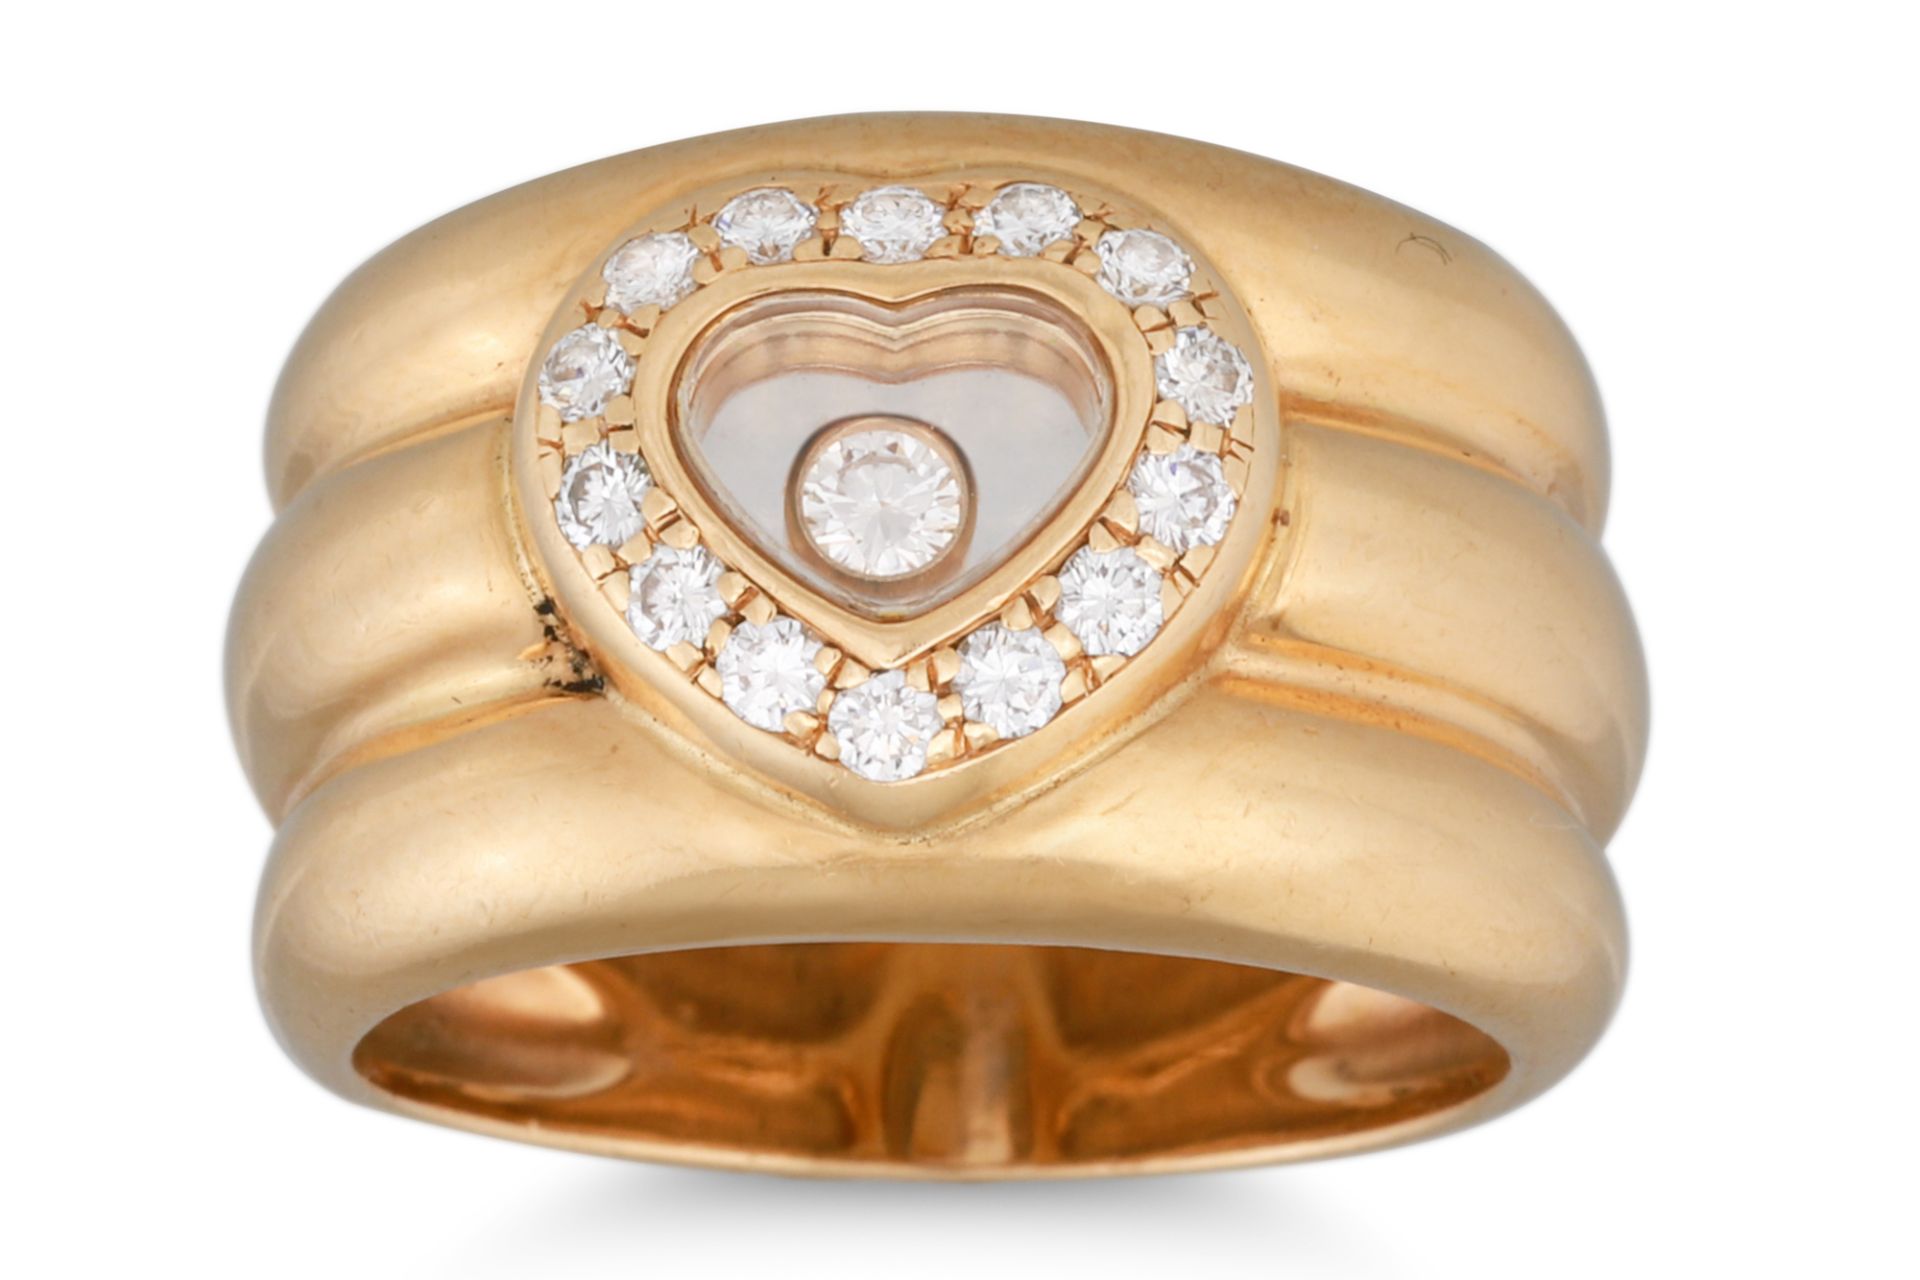 A CHOPARD HAPPY DIAMOND RING, comprising a diamond set heart shaped panel enclosing a diamond